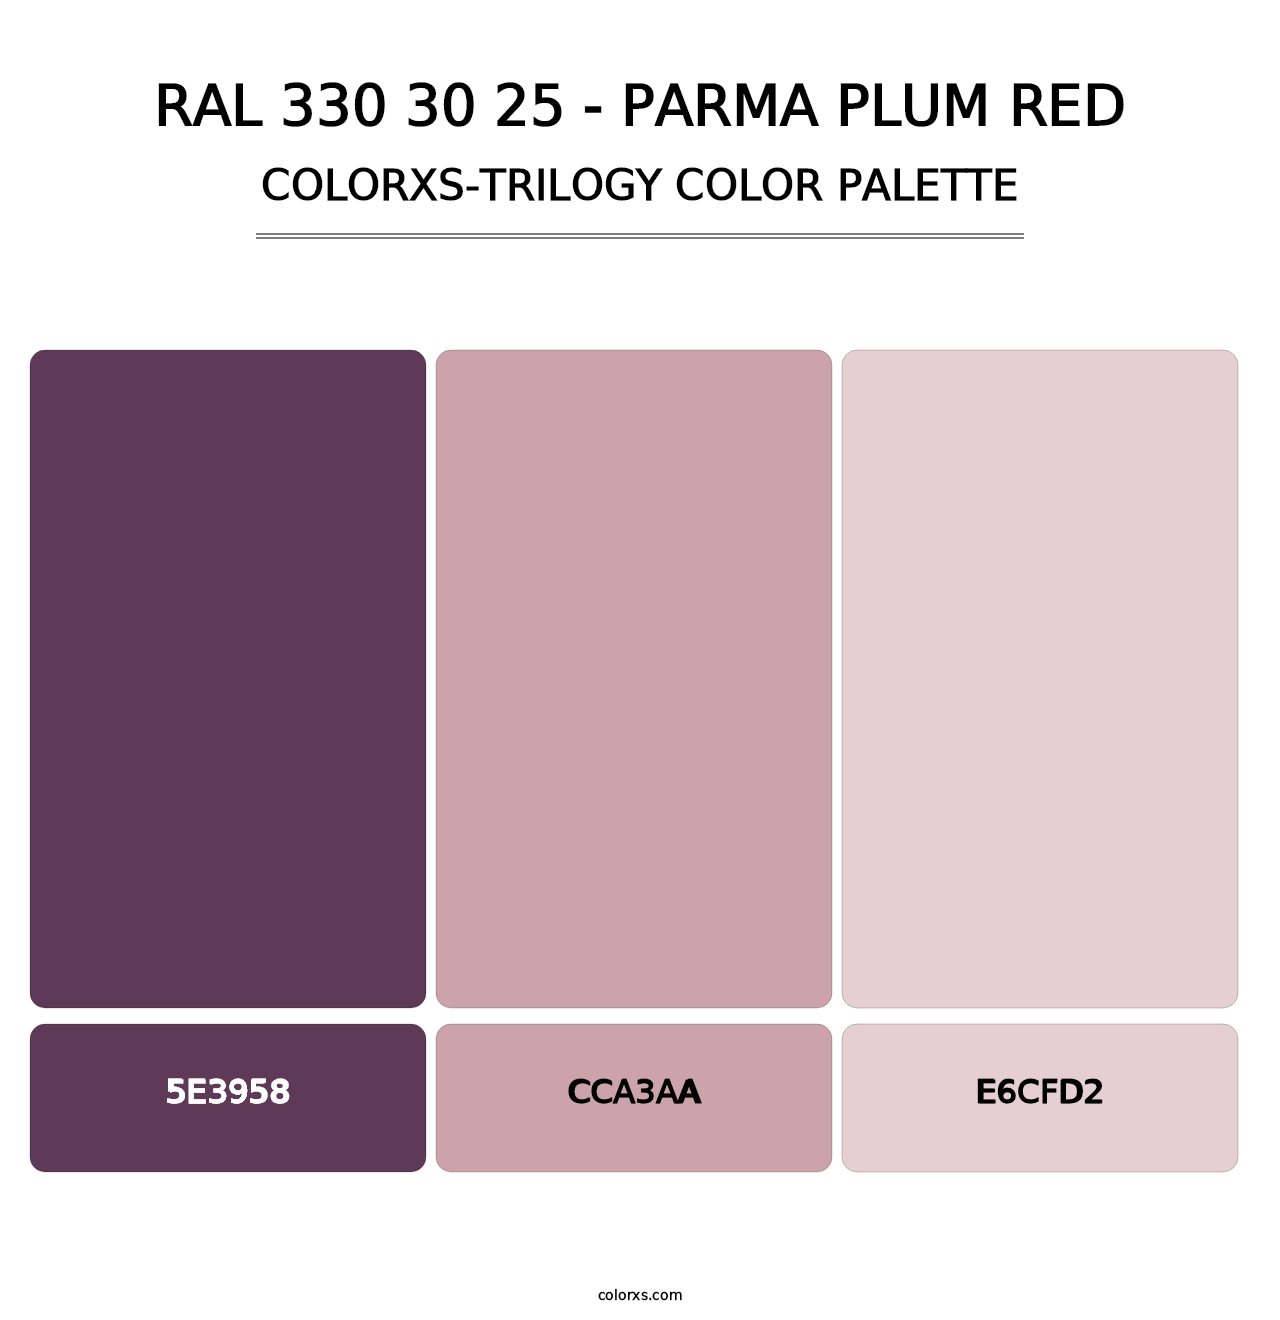 RAL 330 30 25 - Parma Plum Red - Colorxs Trilogy Palette